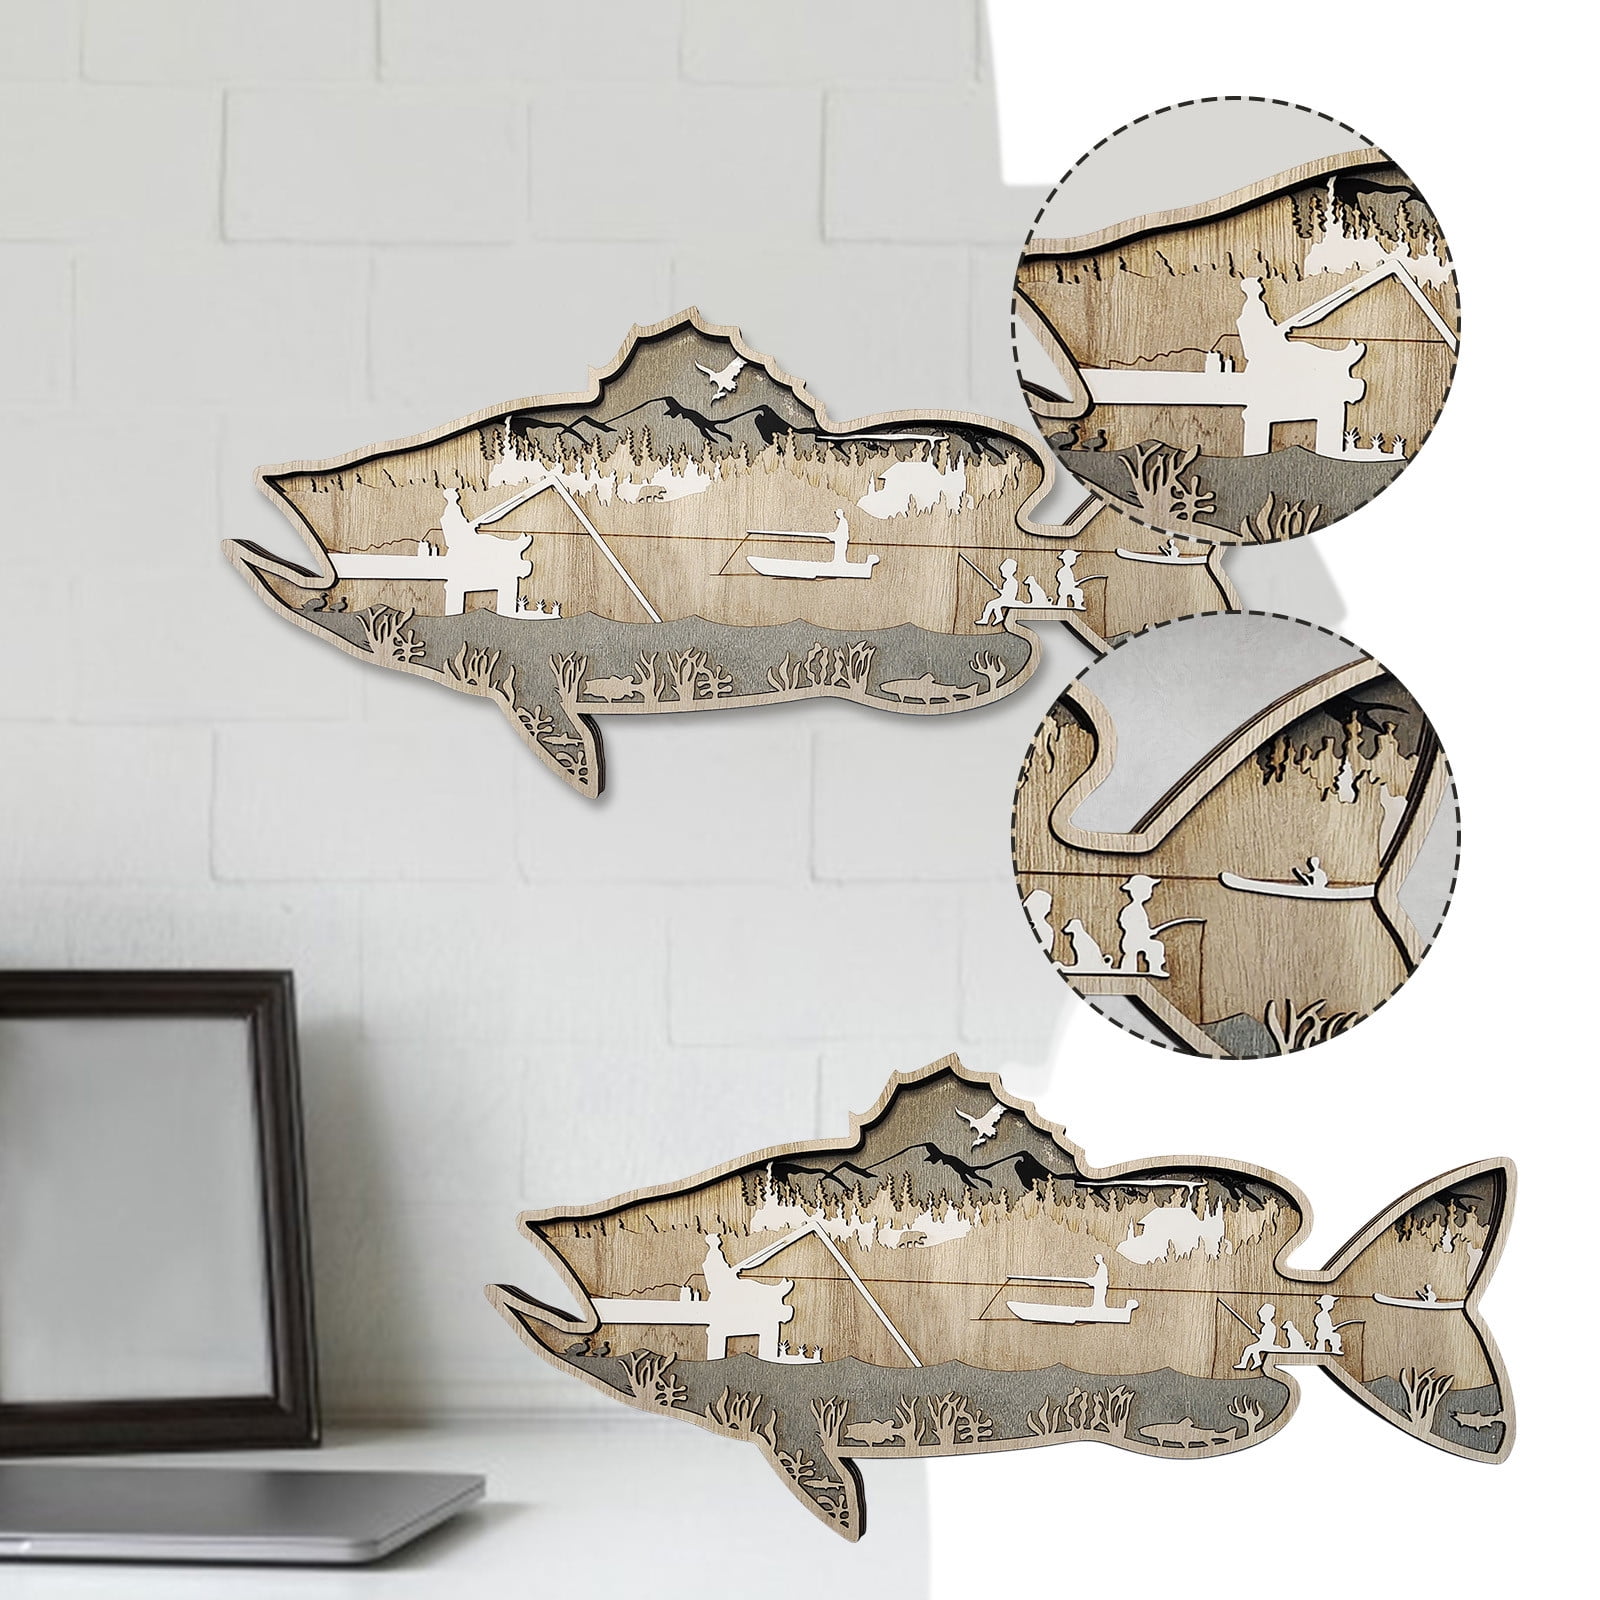 Tiitstoy 6 Layer Largemouth Bass Fish Crappie Fish Wooden Decoration Wall  Art Decor 